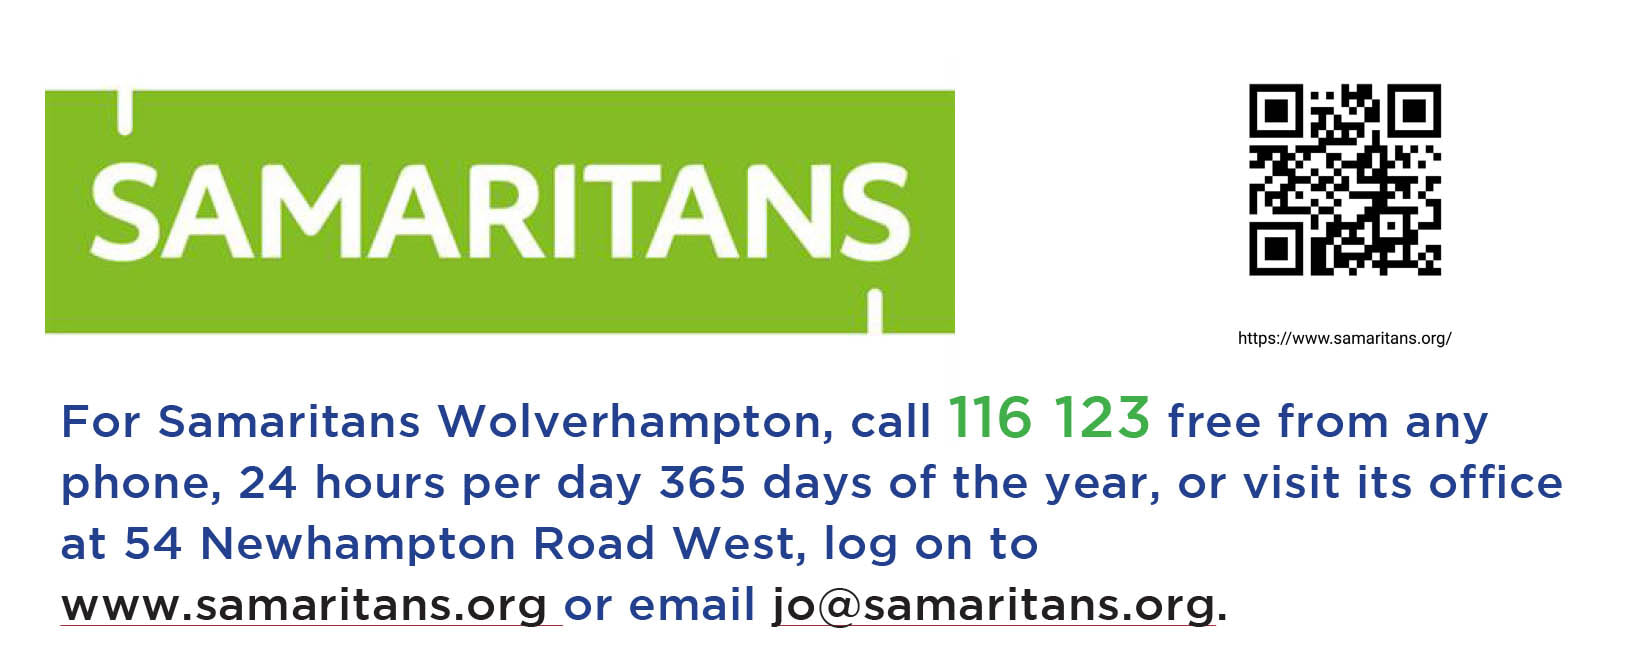 Banner linking to Samaritans website